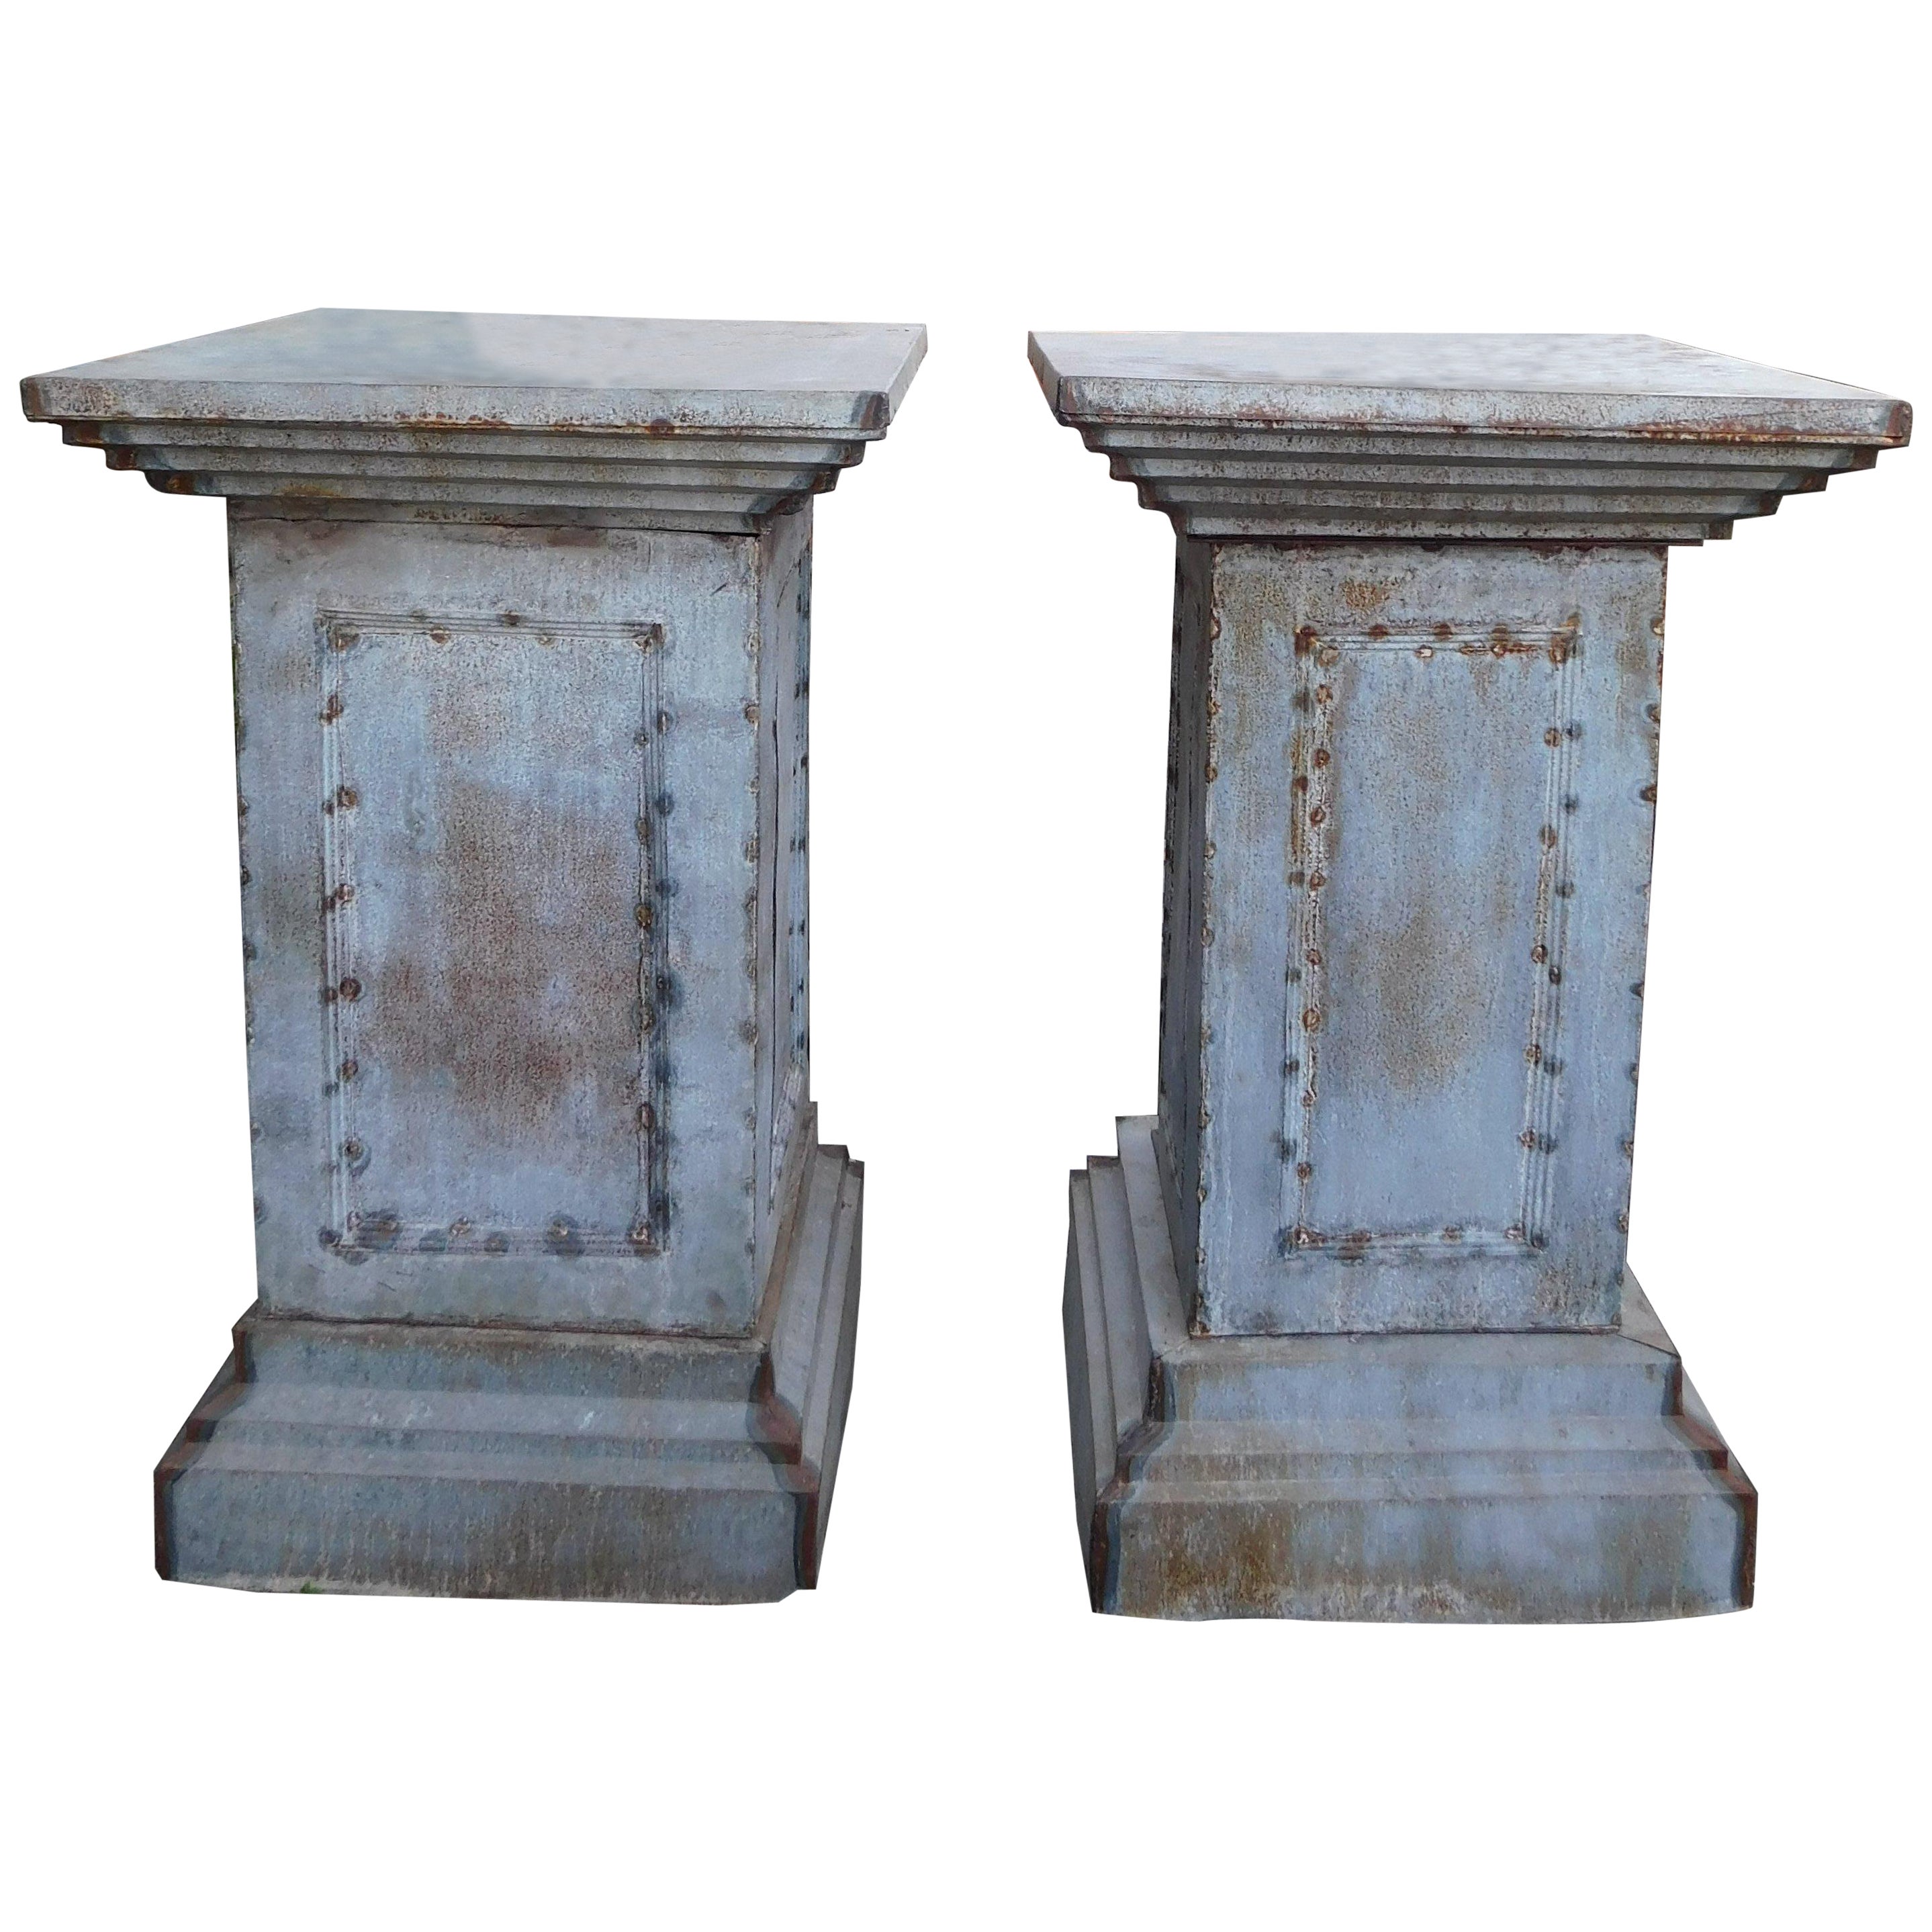 Pair of sheet metal vase or statue holder pedestals, Italy